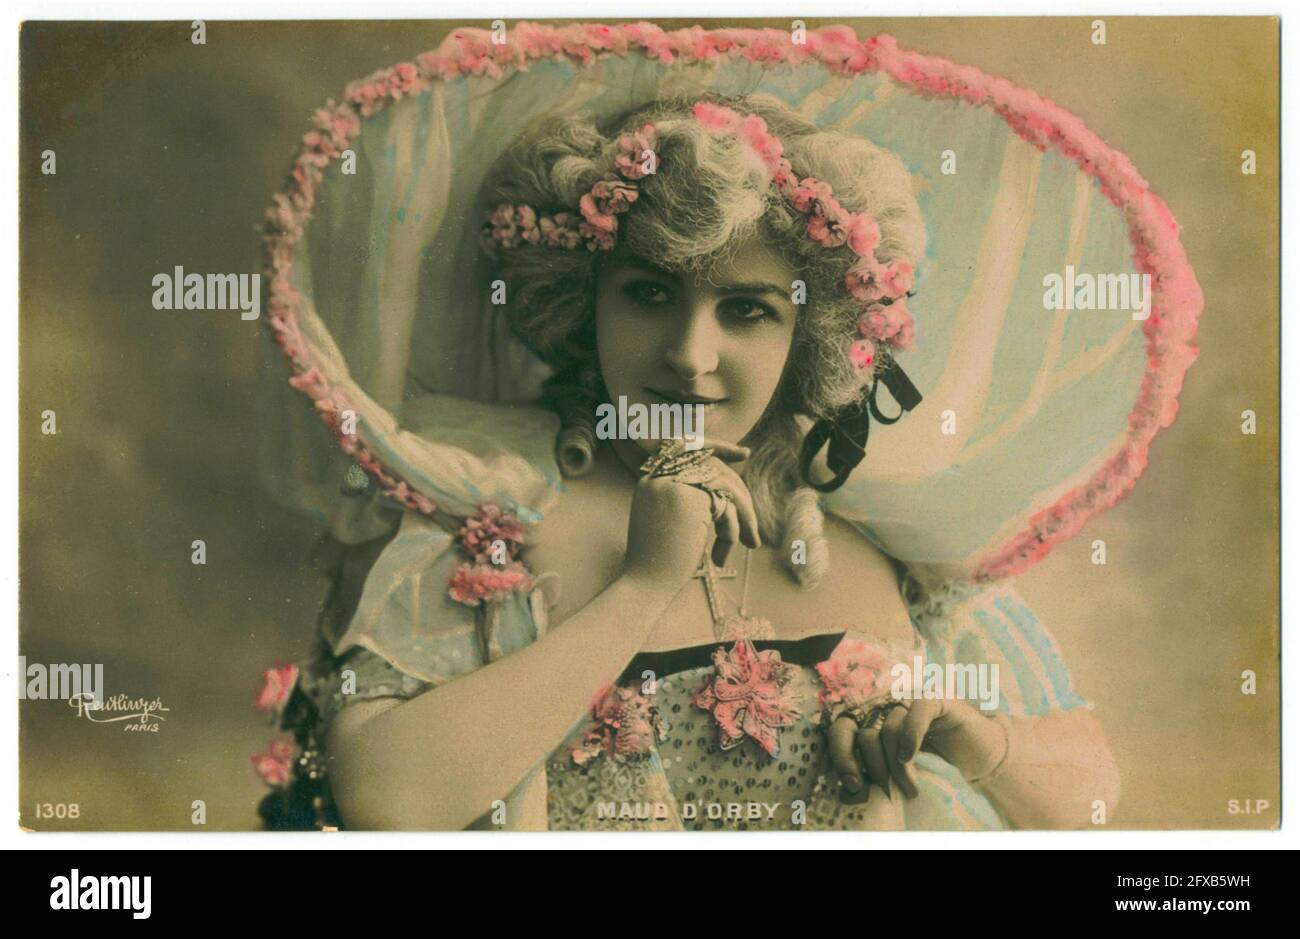 Léopold-Émile Reutlinger vintage portrait photograph of Maud d'Orby, opera singer, actress and art model. Stock Photo